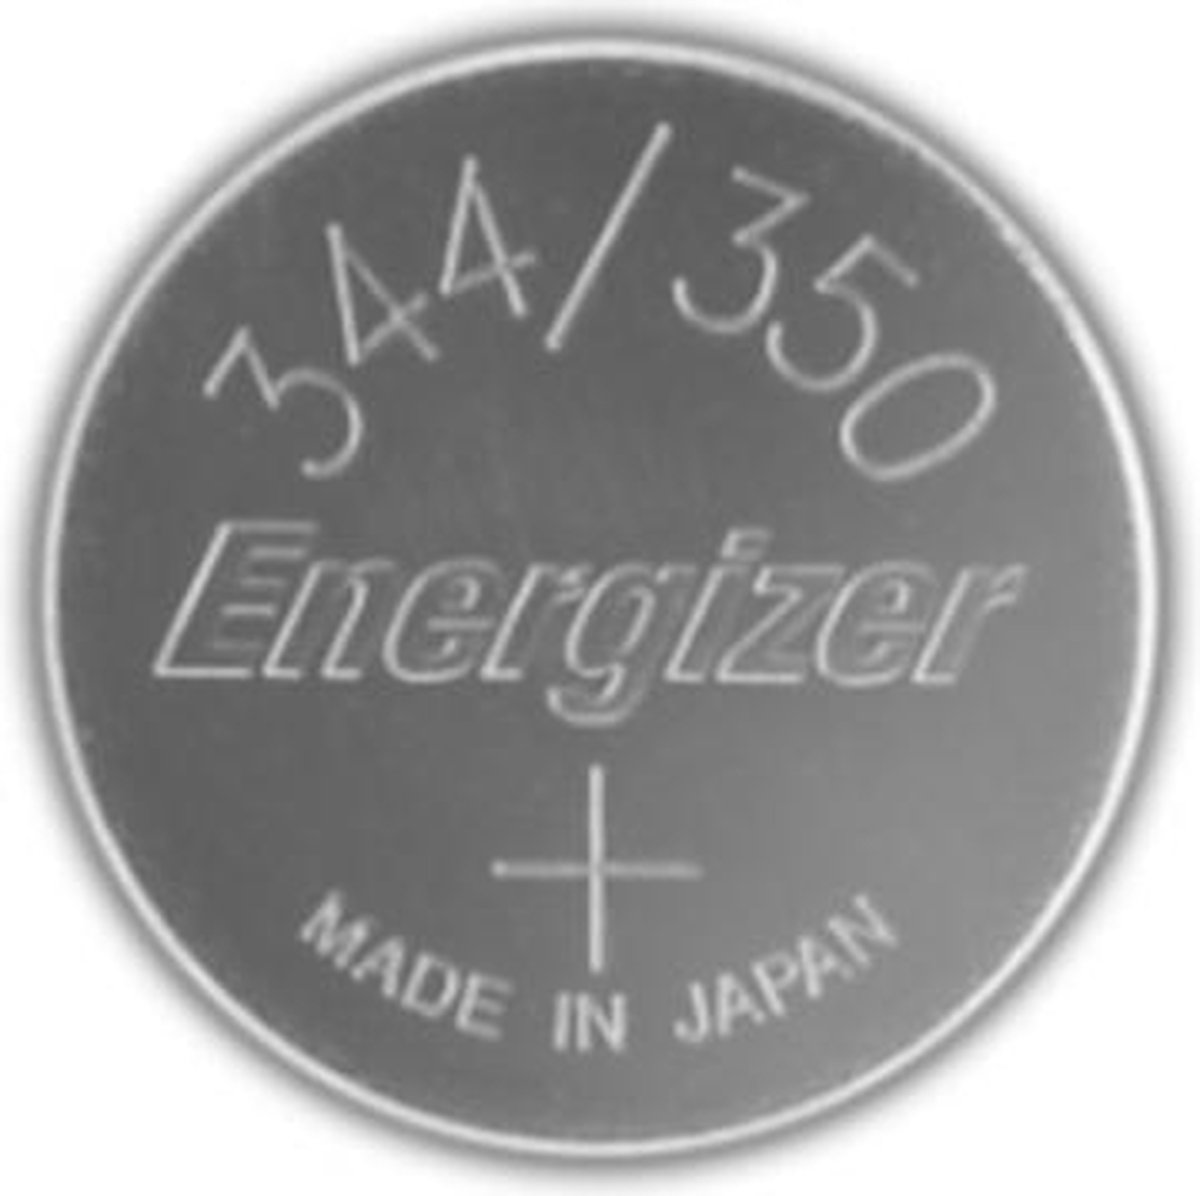 Energizer Batterij Knoopcel 344/350 Sr42 1 Stuk